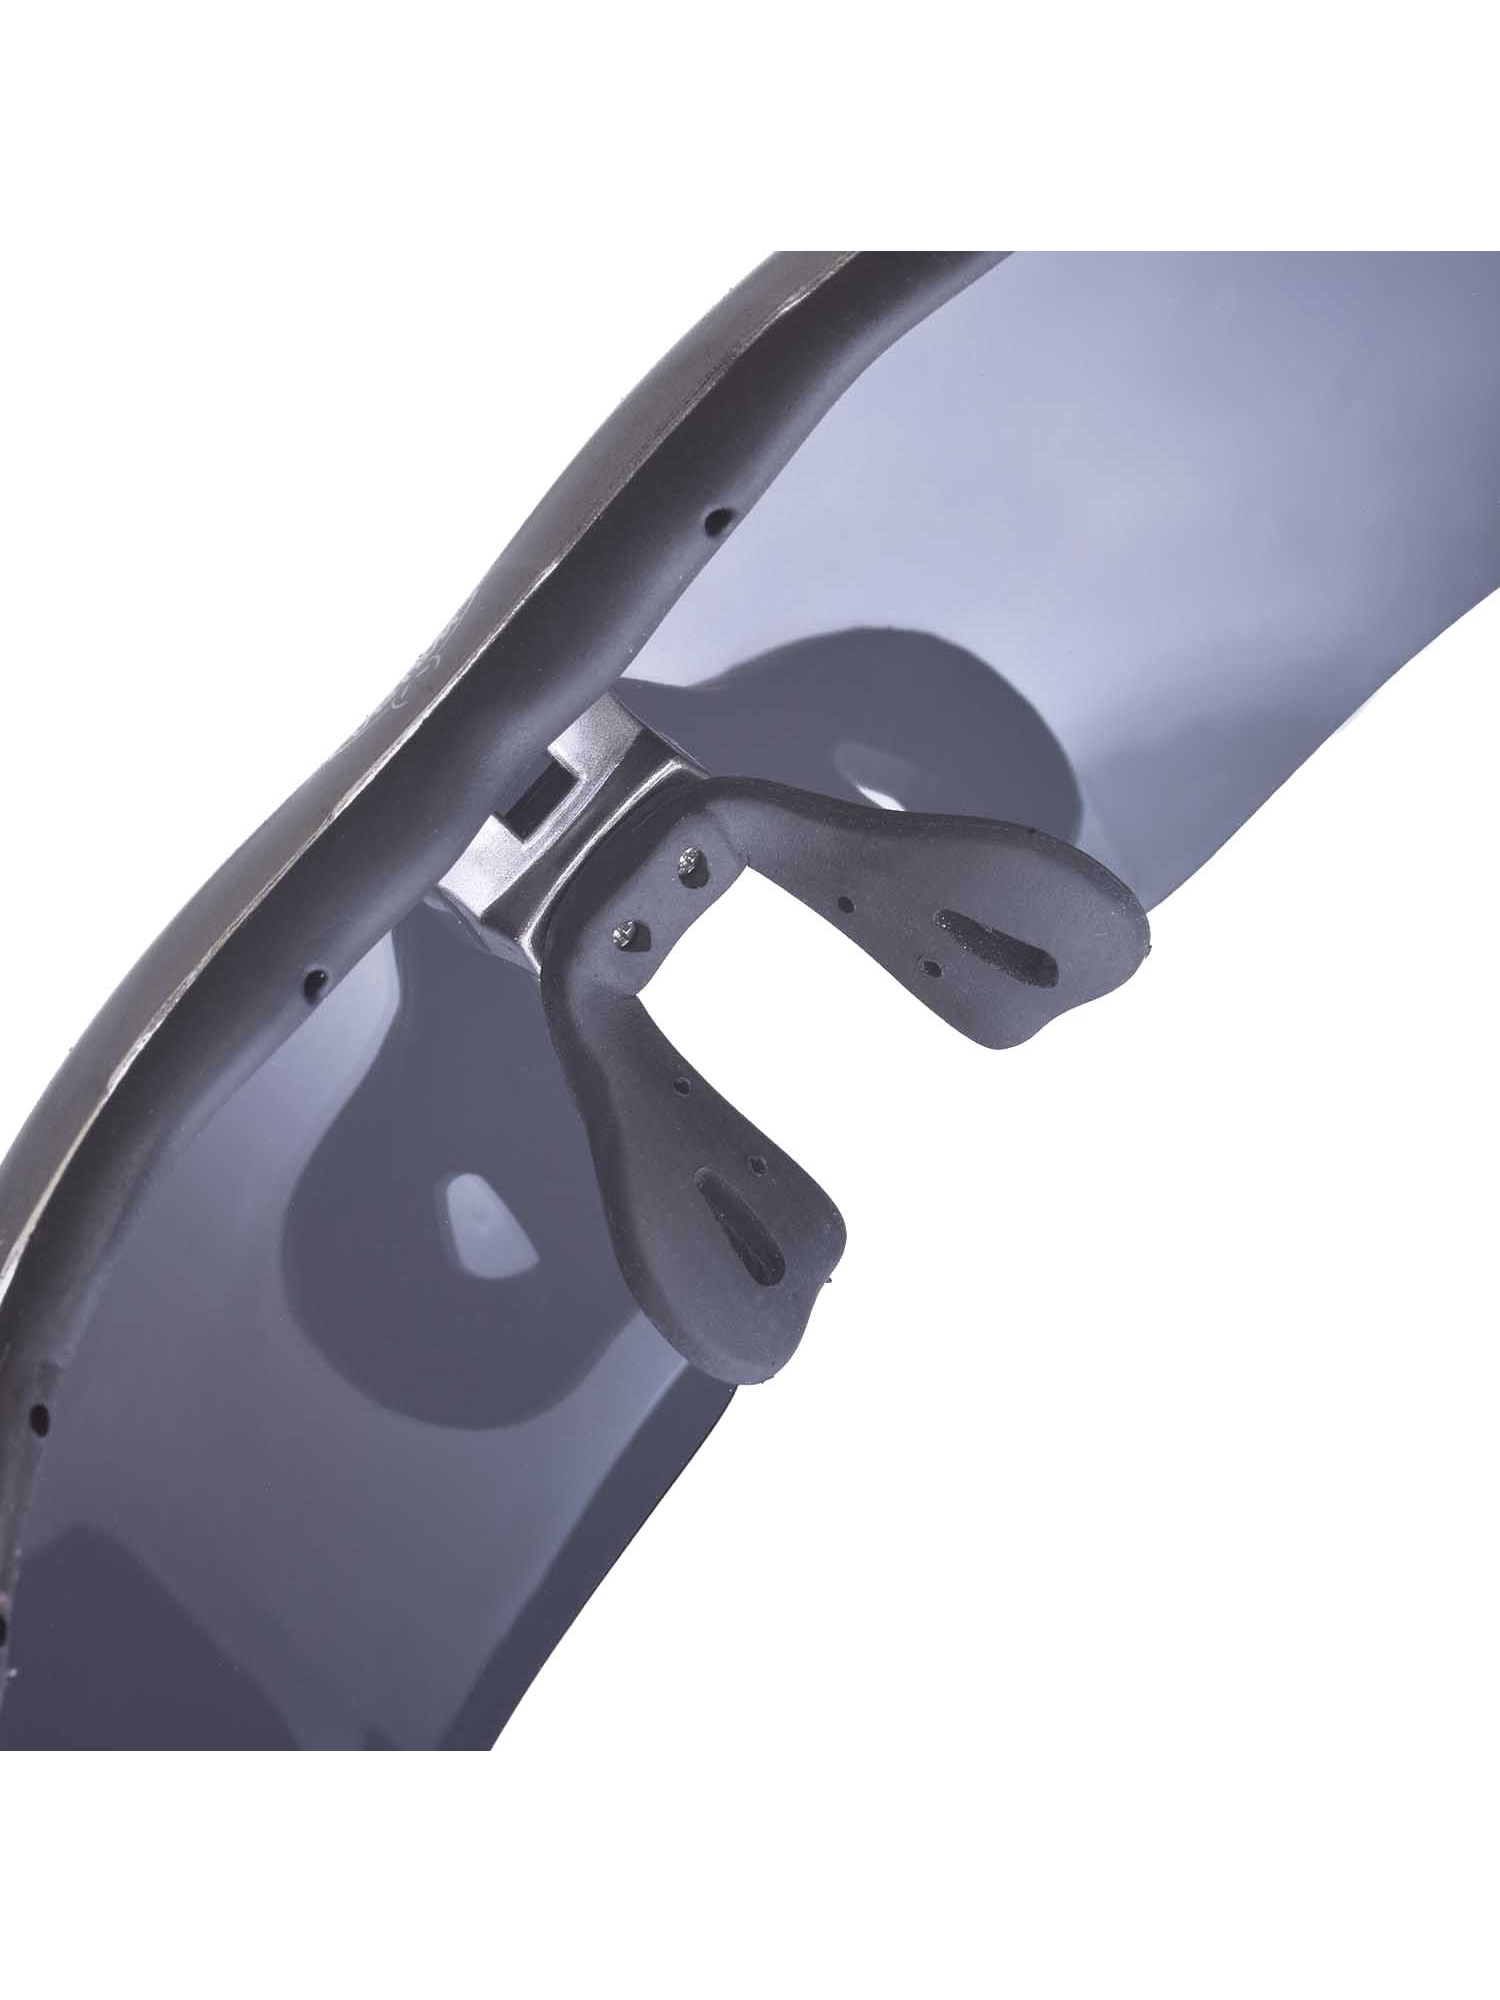 Walleva Polarized Sports Sunglasses With TR90 Frame - Multiple Options Available (Titanium Mirror Coated - Polarized) - image 3 of 8